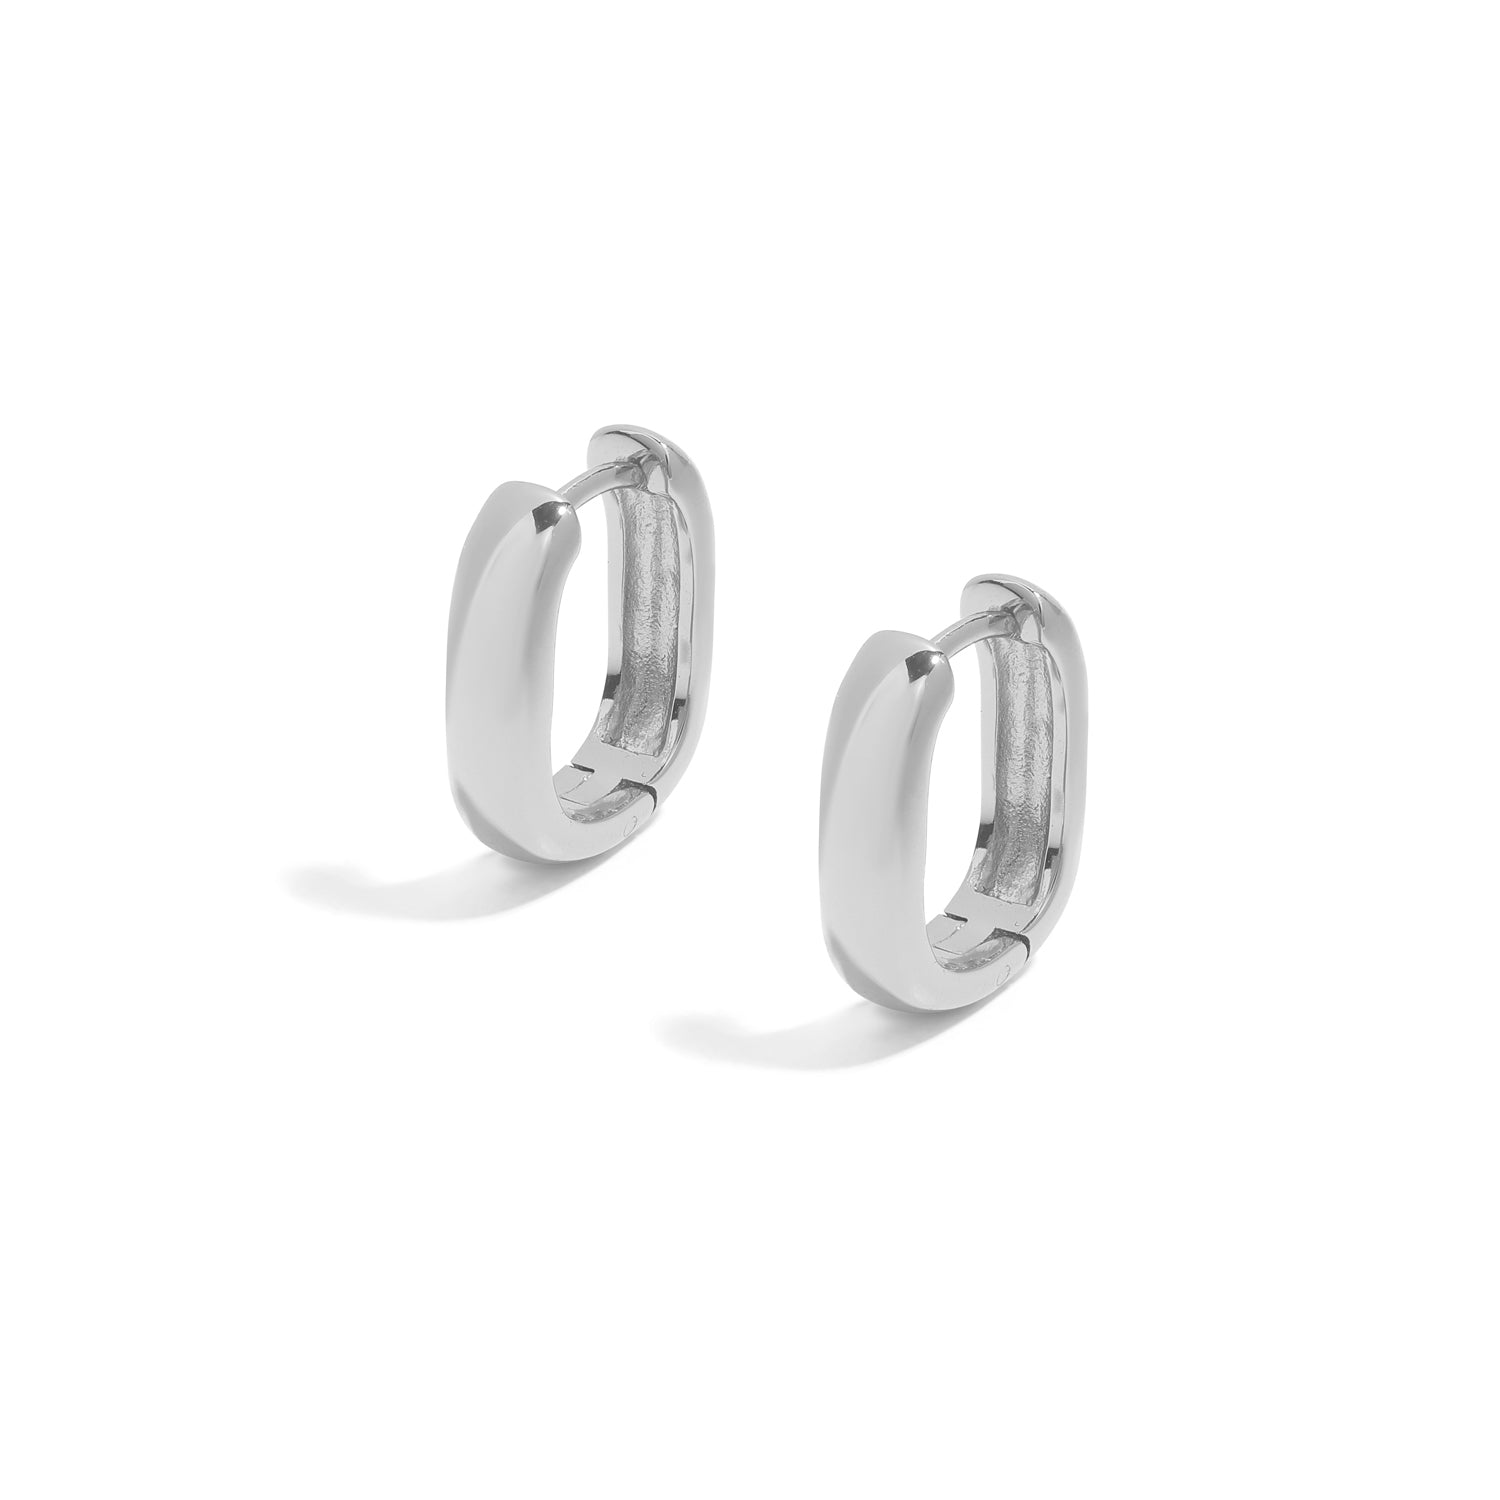 Elegant and minimalist earrings. Silver rounded huggies.